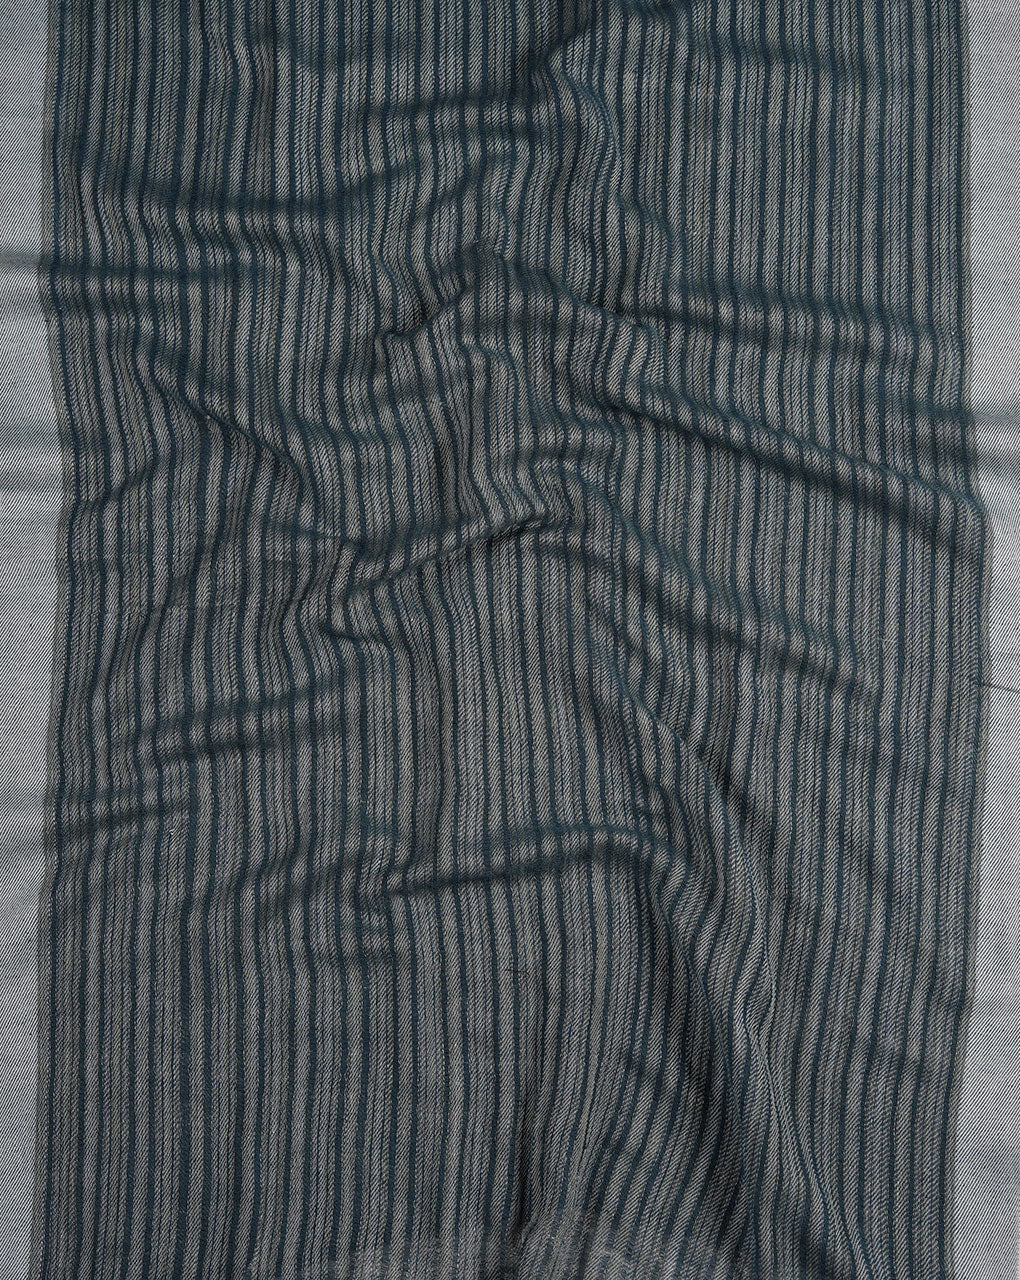 Teal Stripes Woven Bhagalpuri Cotton Stole - Fabriclore.com